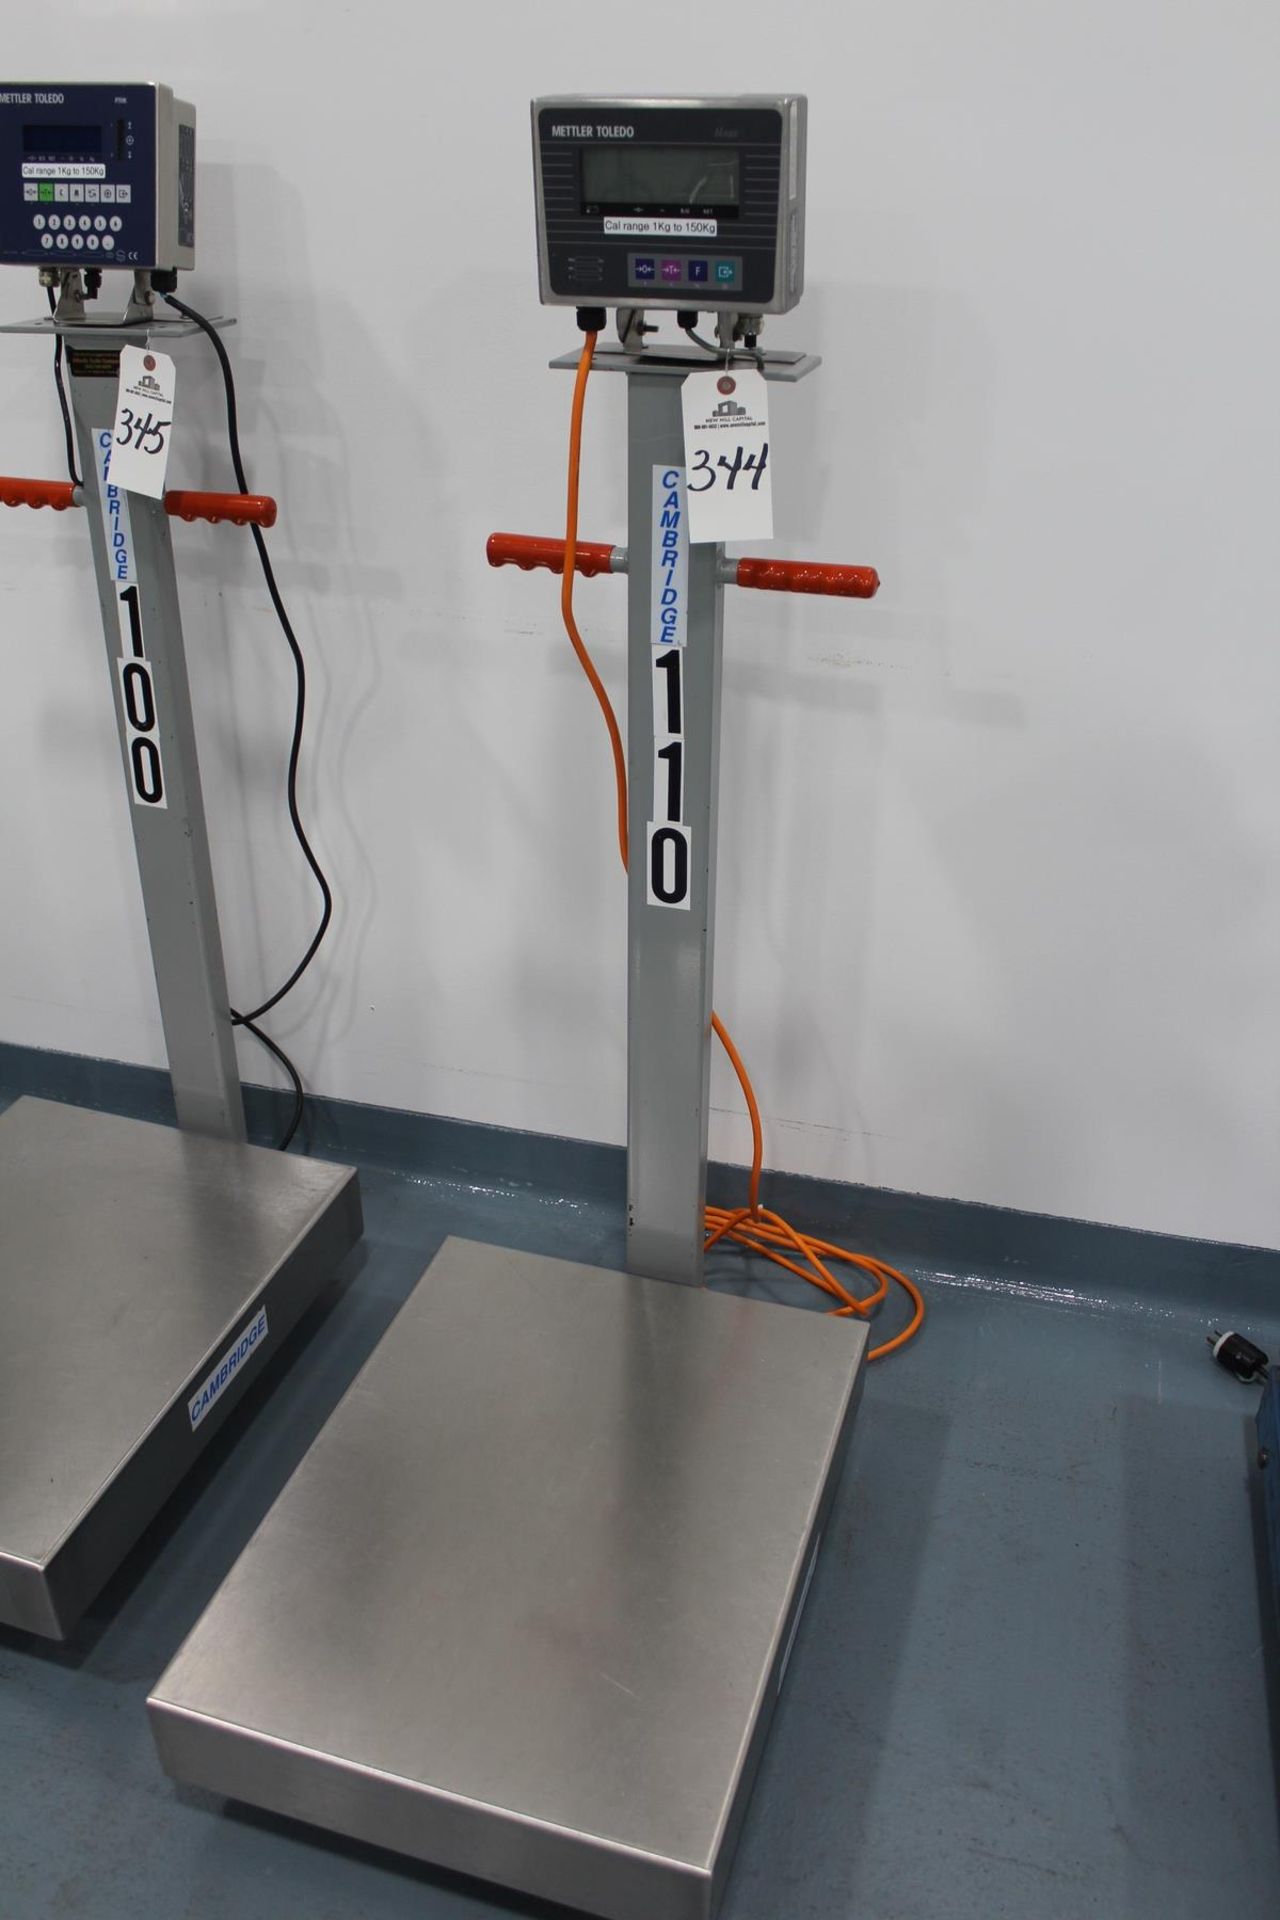 Mettler Toledo Portable Laboratory Platform Scale, M# Hawk, S/N 00209426DF | Rig Fee: $40 or HC